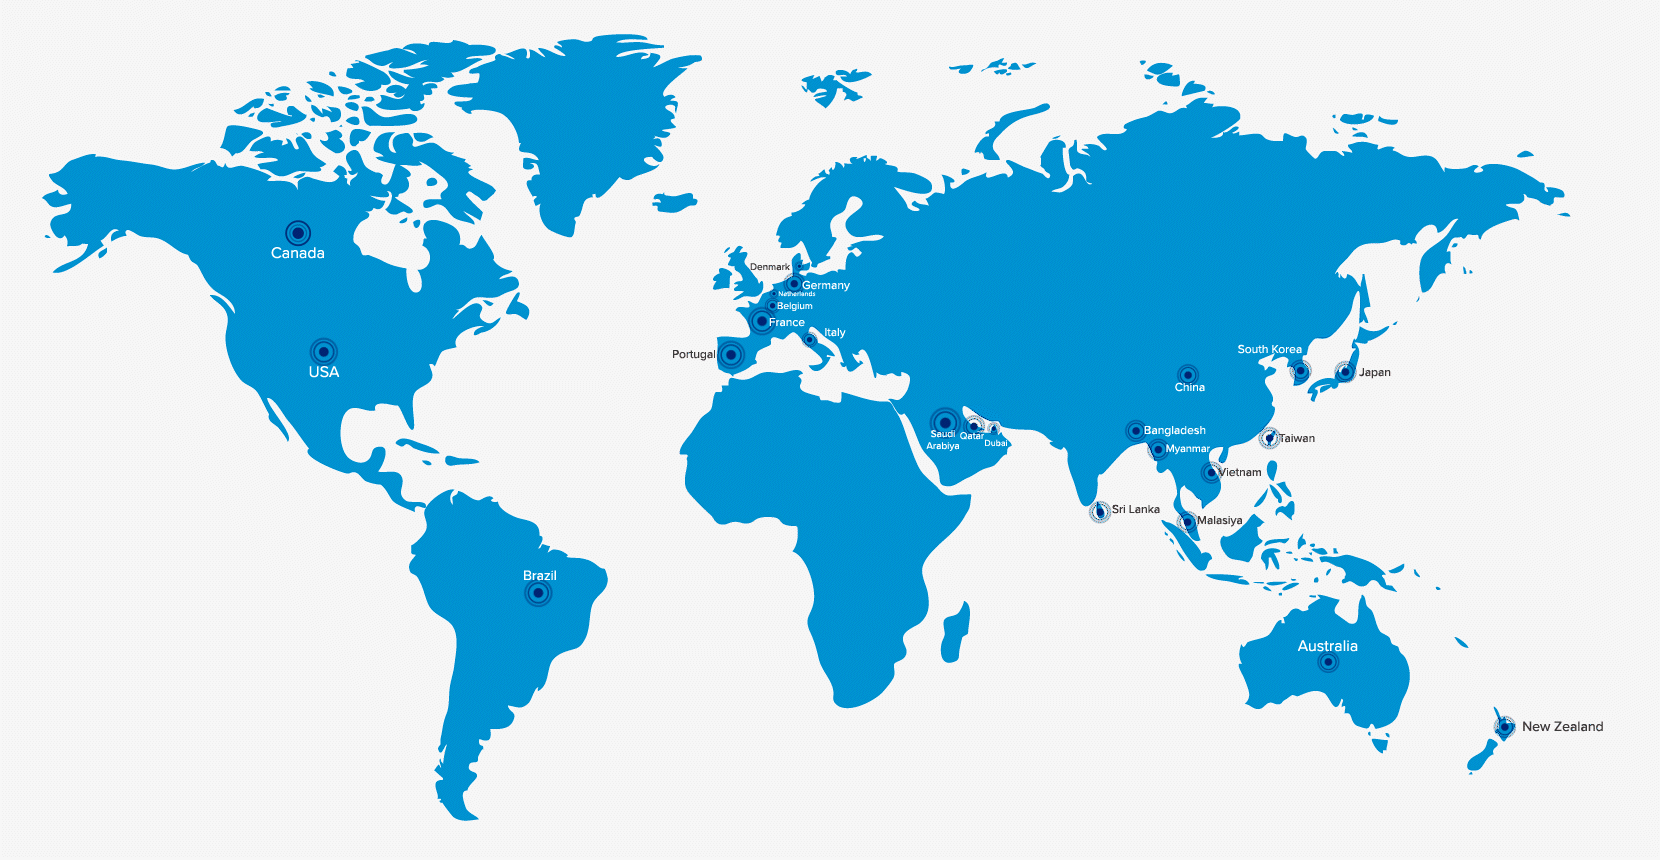 Global Connect World Map Image - KKP India